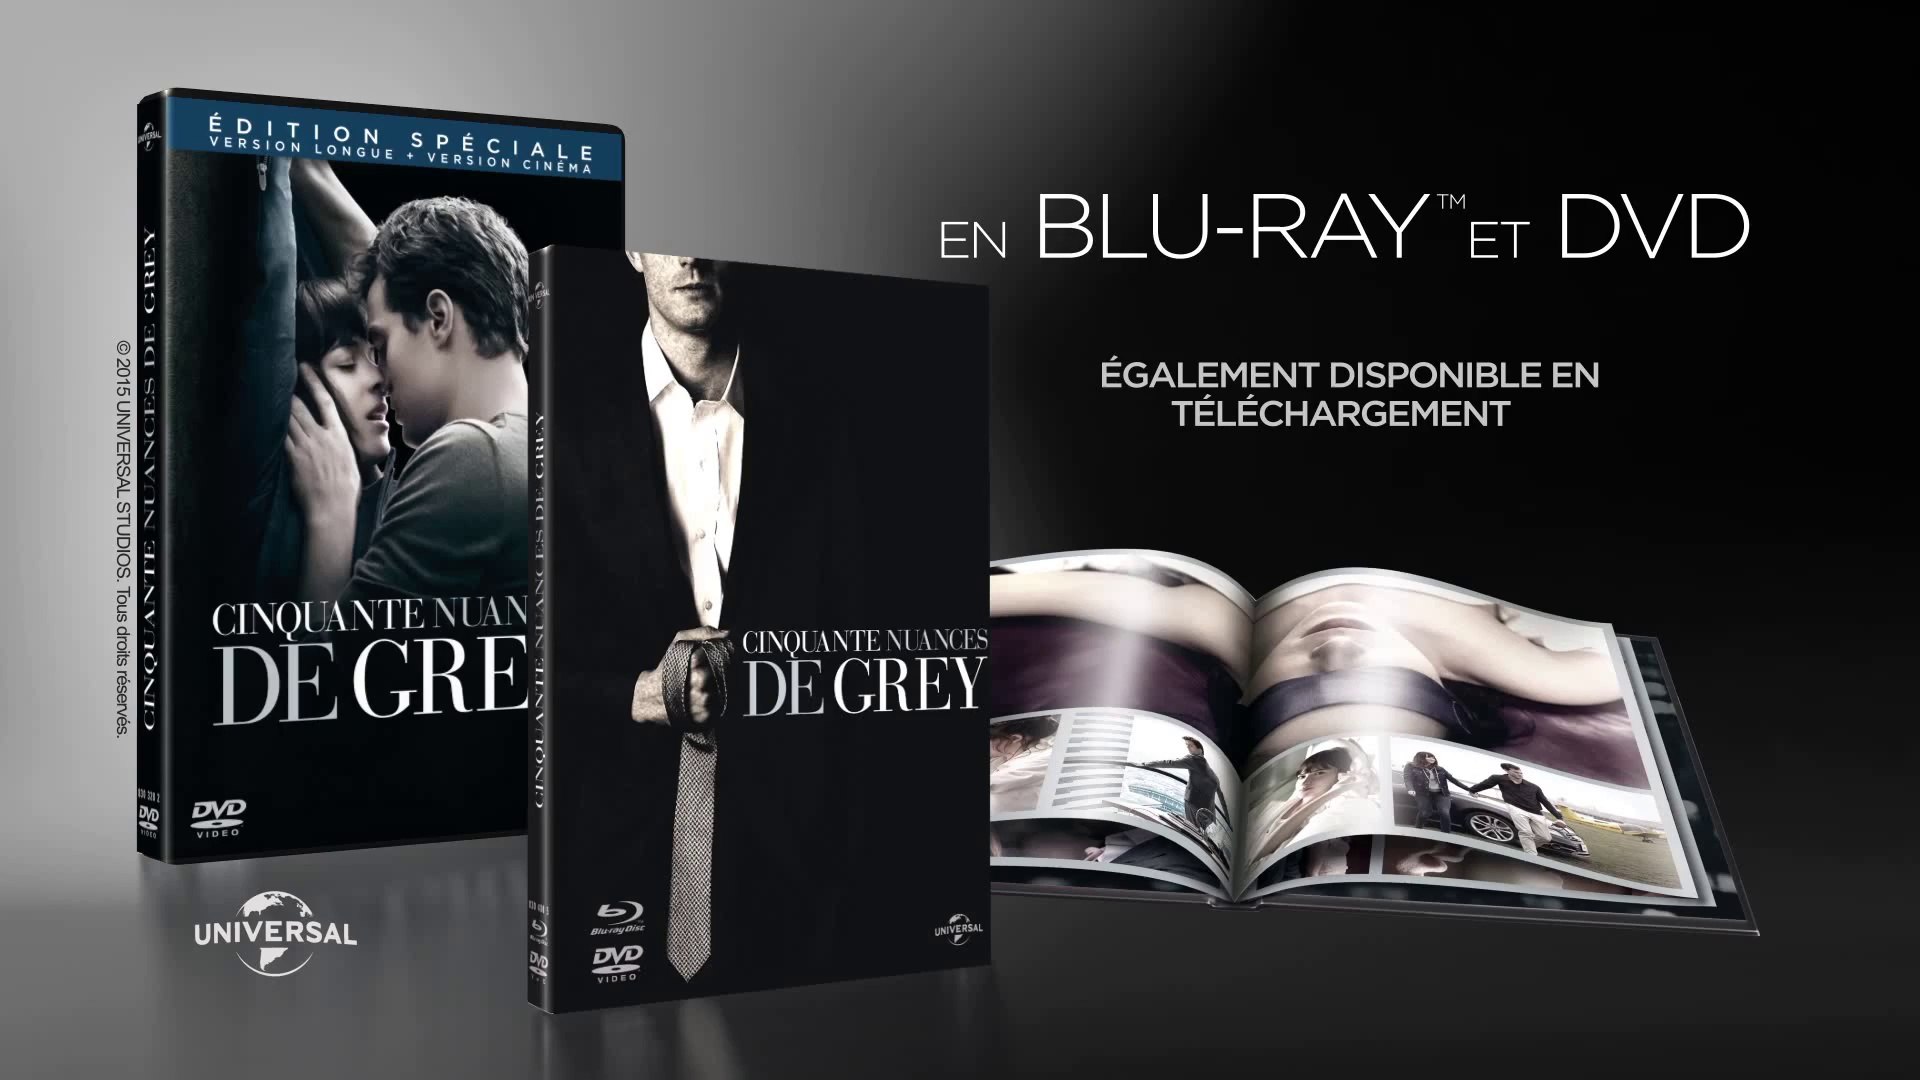 Cinquante Nuances de Grey - Bande-annonce "DVD / Blu-ray" [VF|Full HD]  (Jamie Dornan, Dakota Johnson) - Vidéo Dailymotion